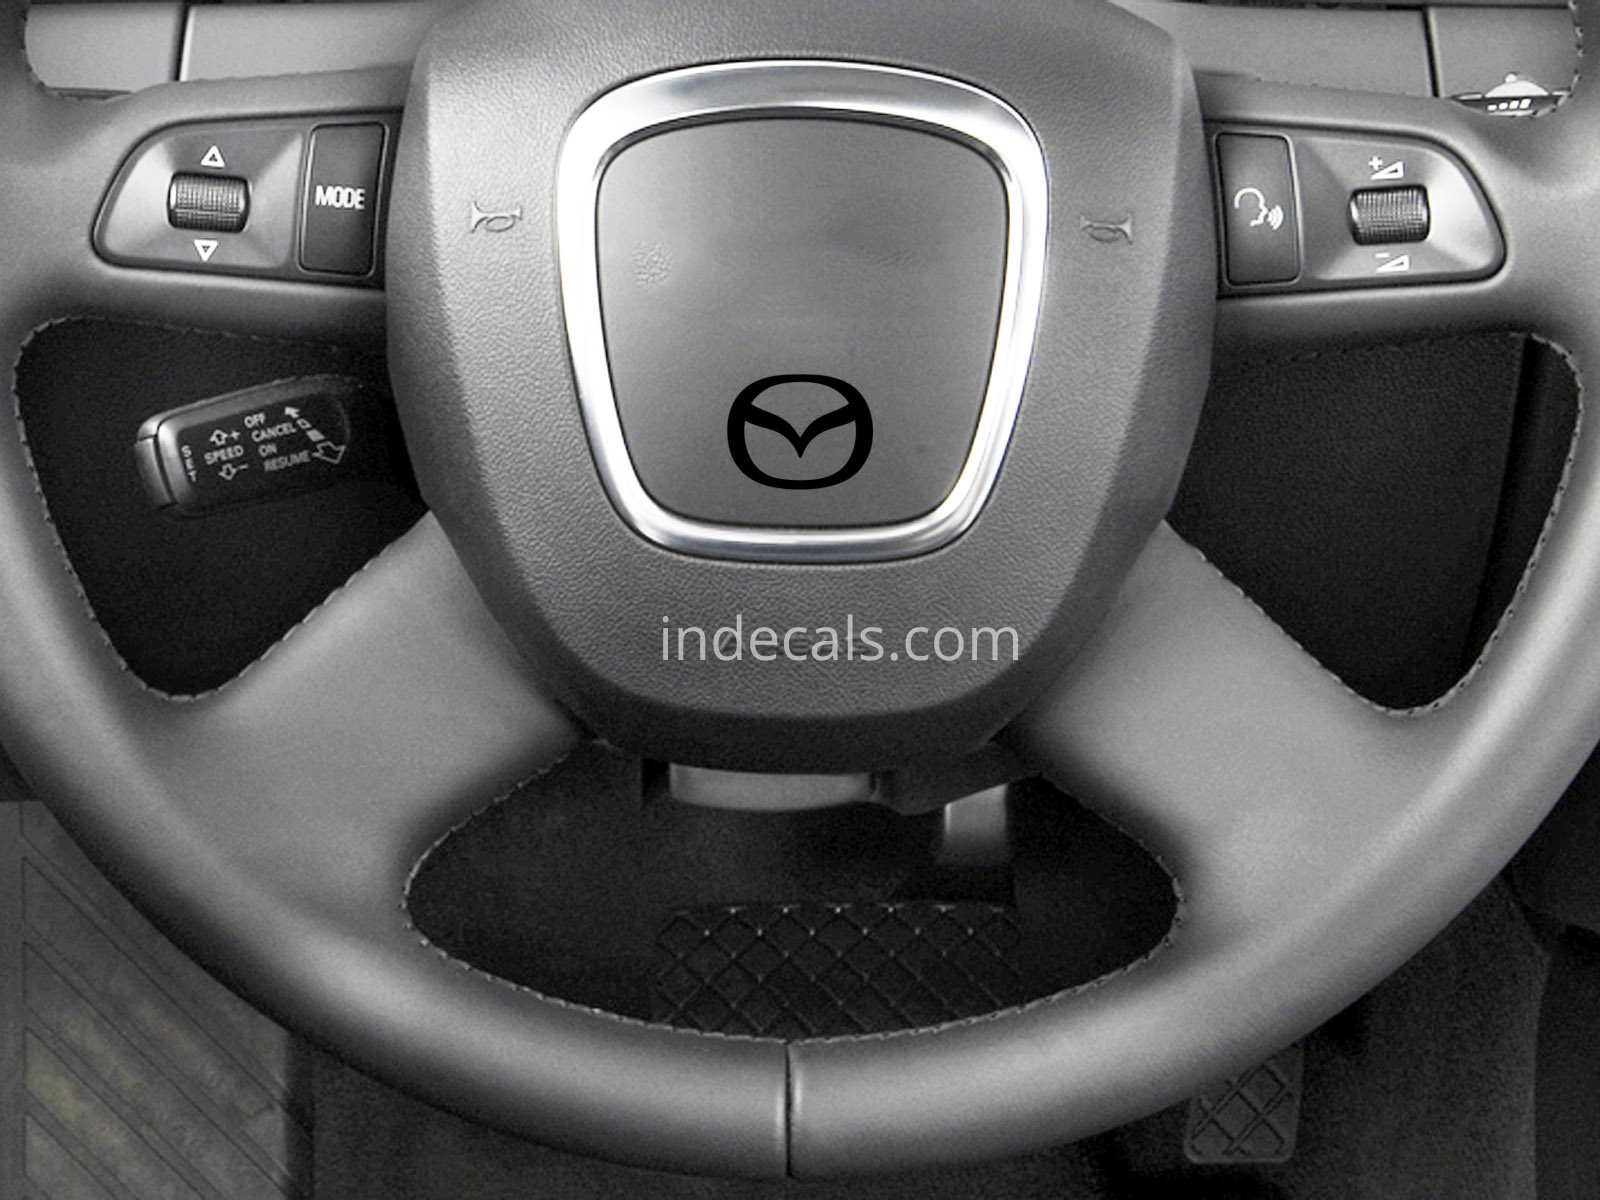 3 x Mazda Stickers for Steering Wheel - Black